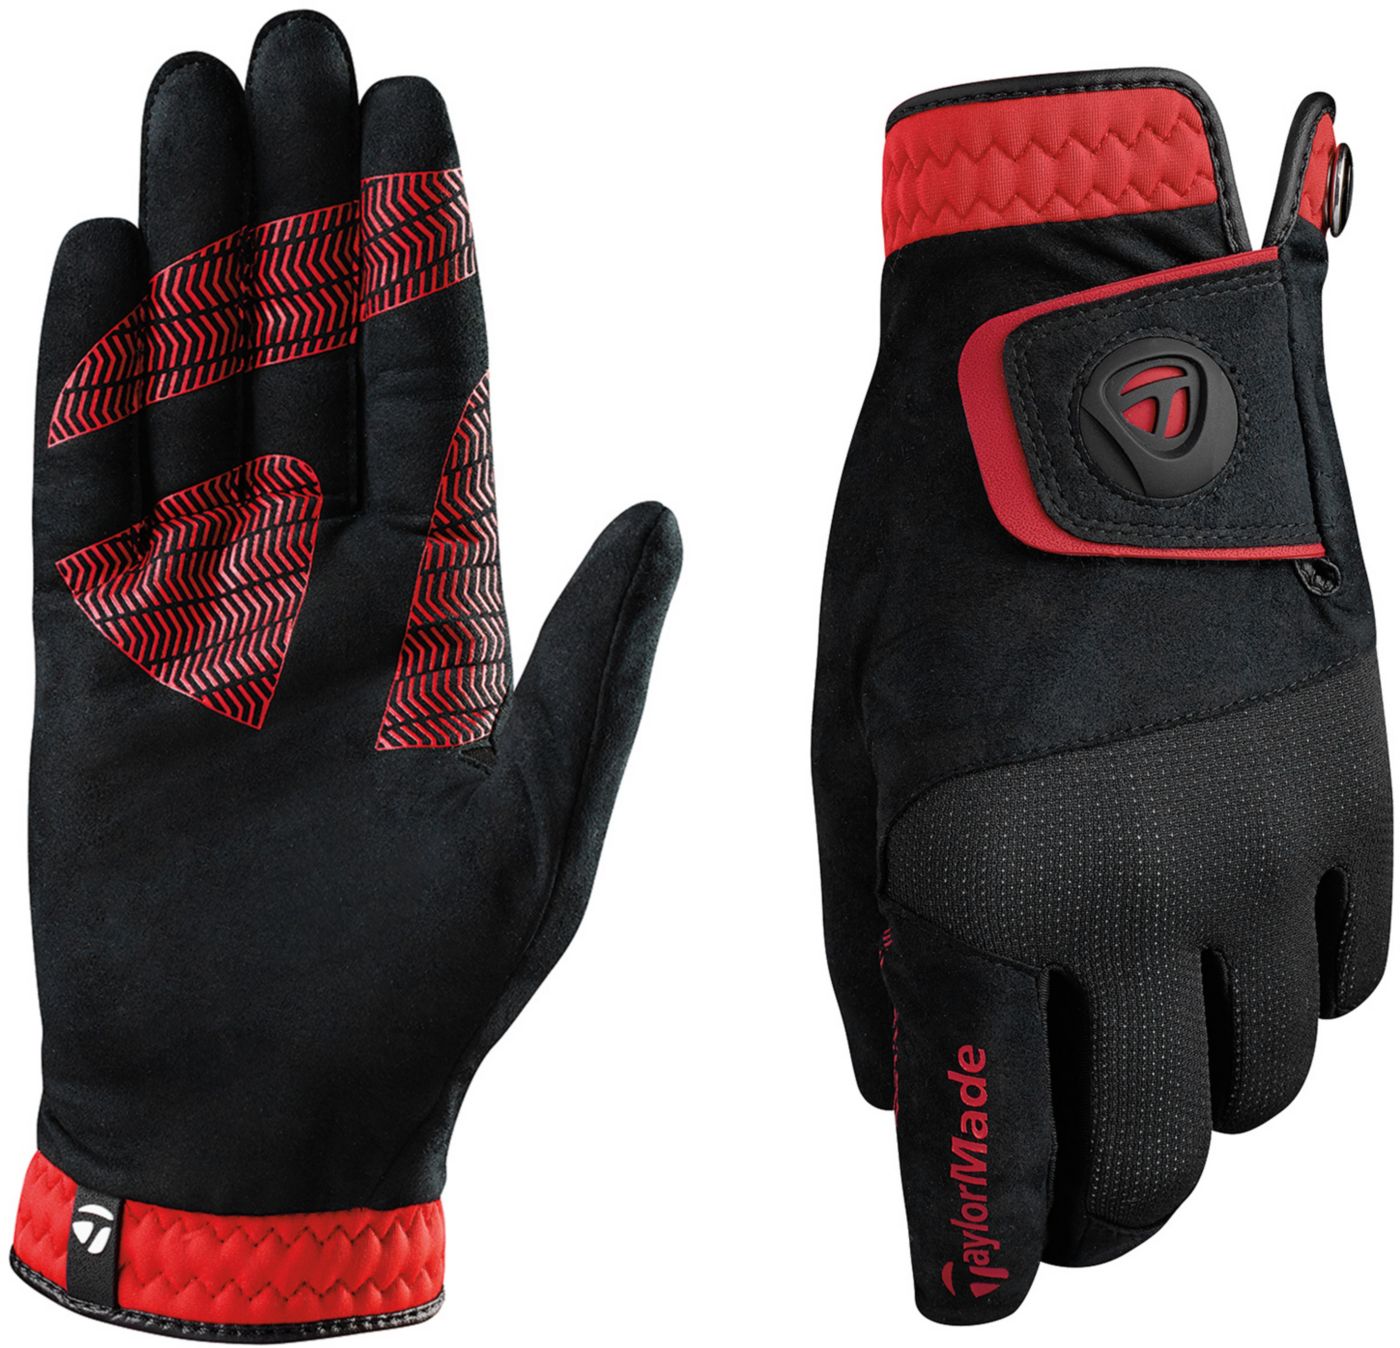 TaylorMade Rain Control Golf Gloves 1